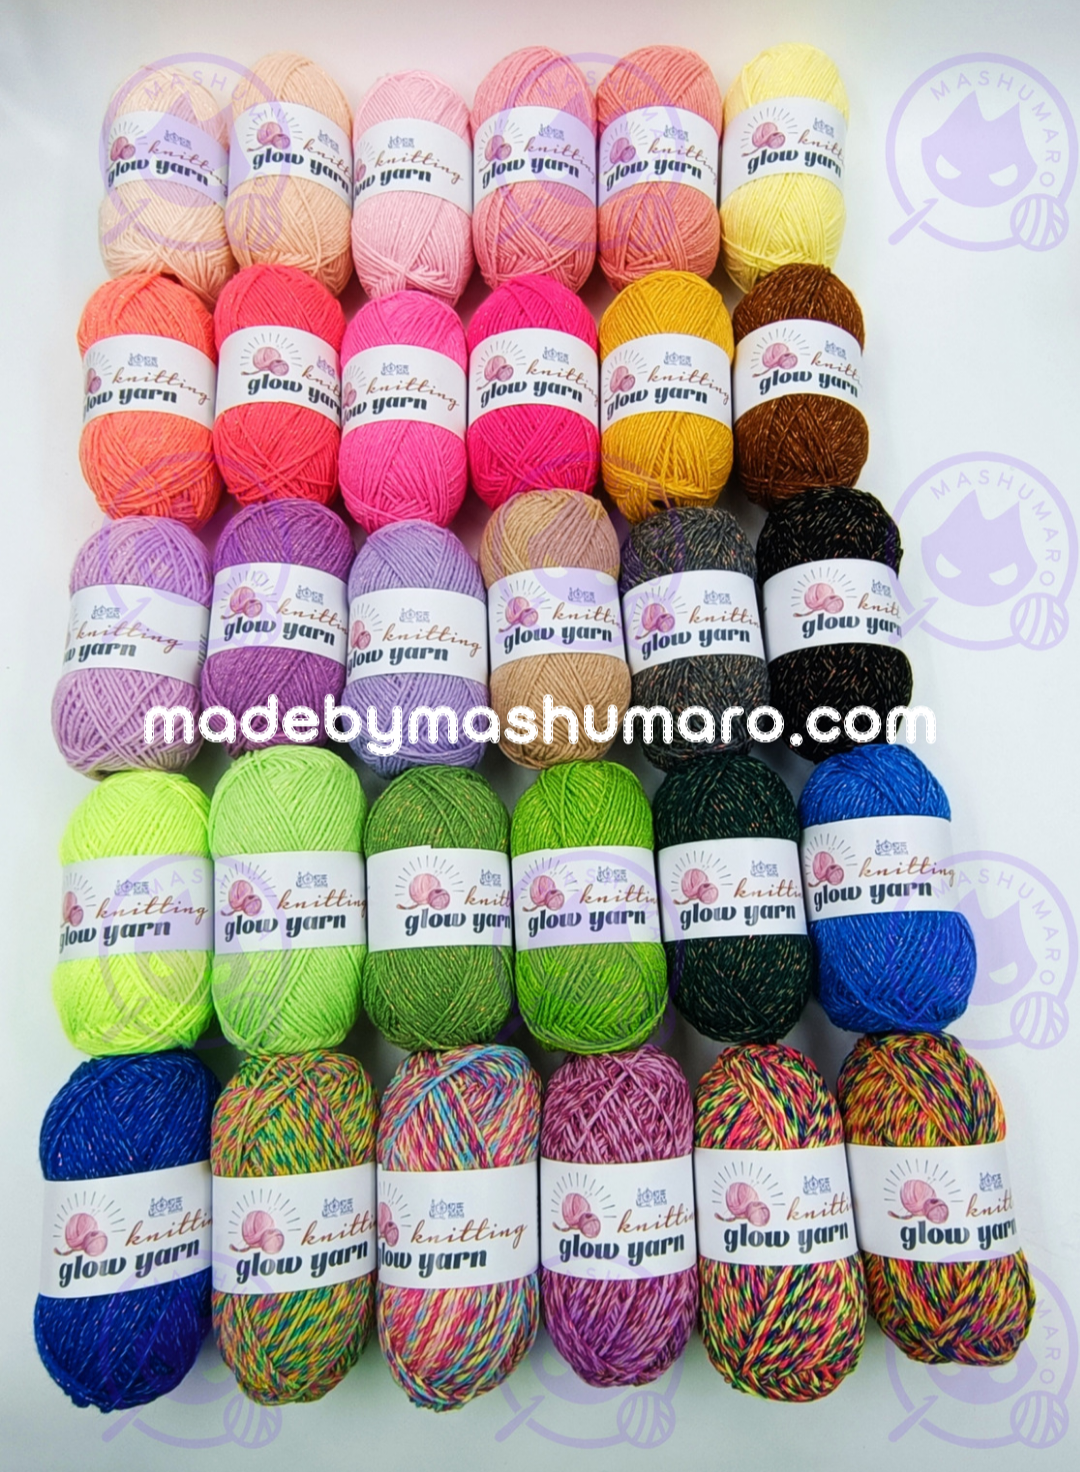 caichuxiye 4pcs Reflective Yarn,Sparkle Yarn,Silver Yarn,for Crafts Glow in  The Dark Yarn for Crochet for Reflective High Visibility Warm Winter Loop